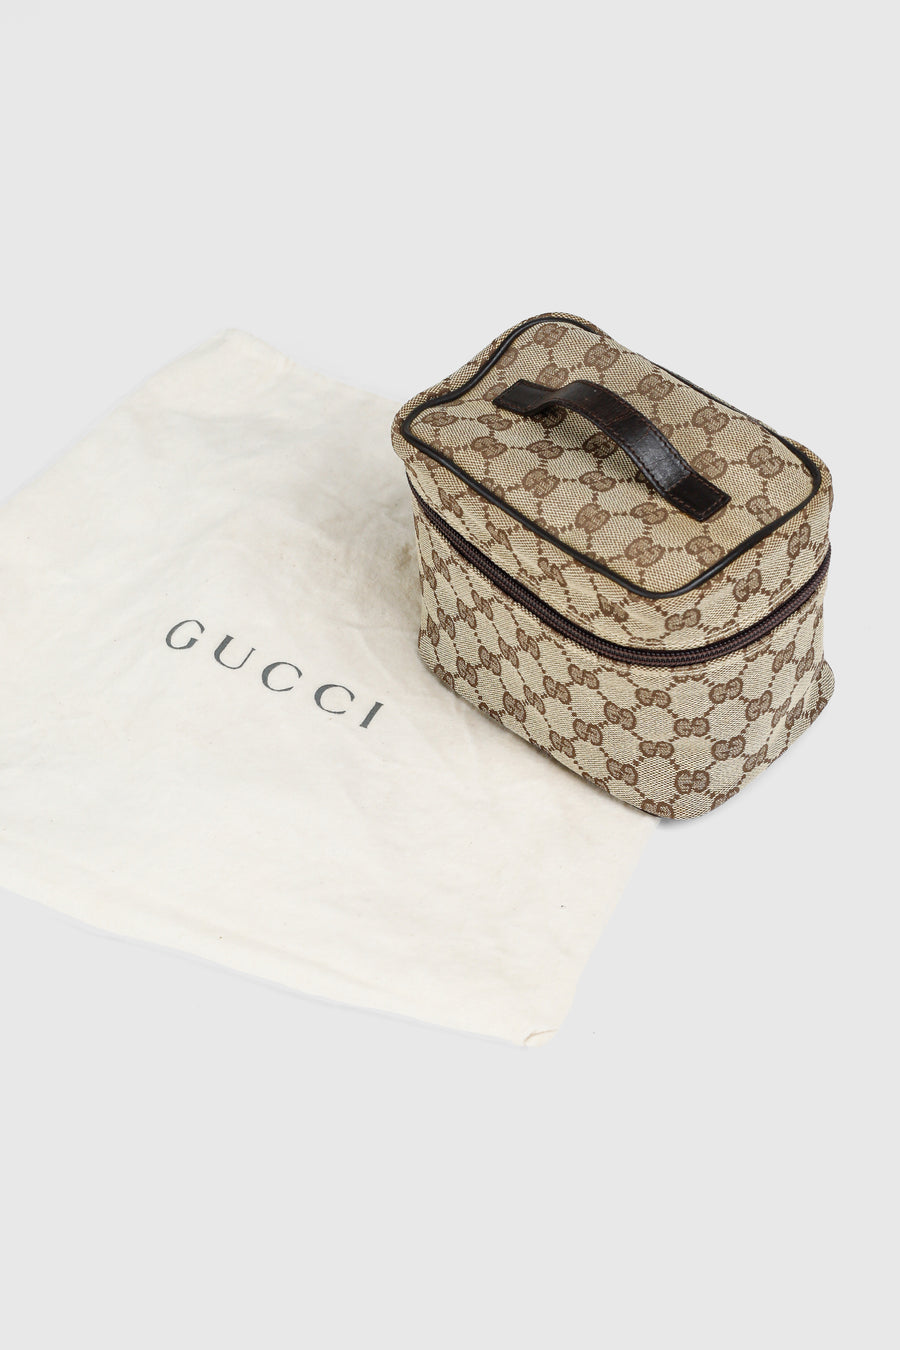 Vintage Gucci Makeup Bag